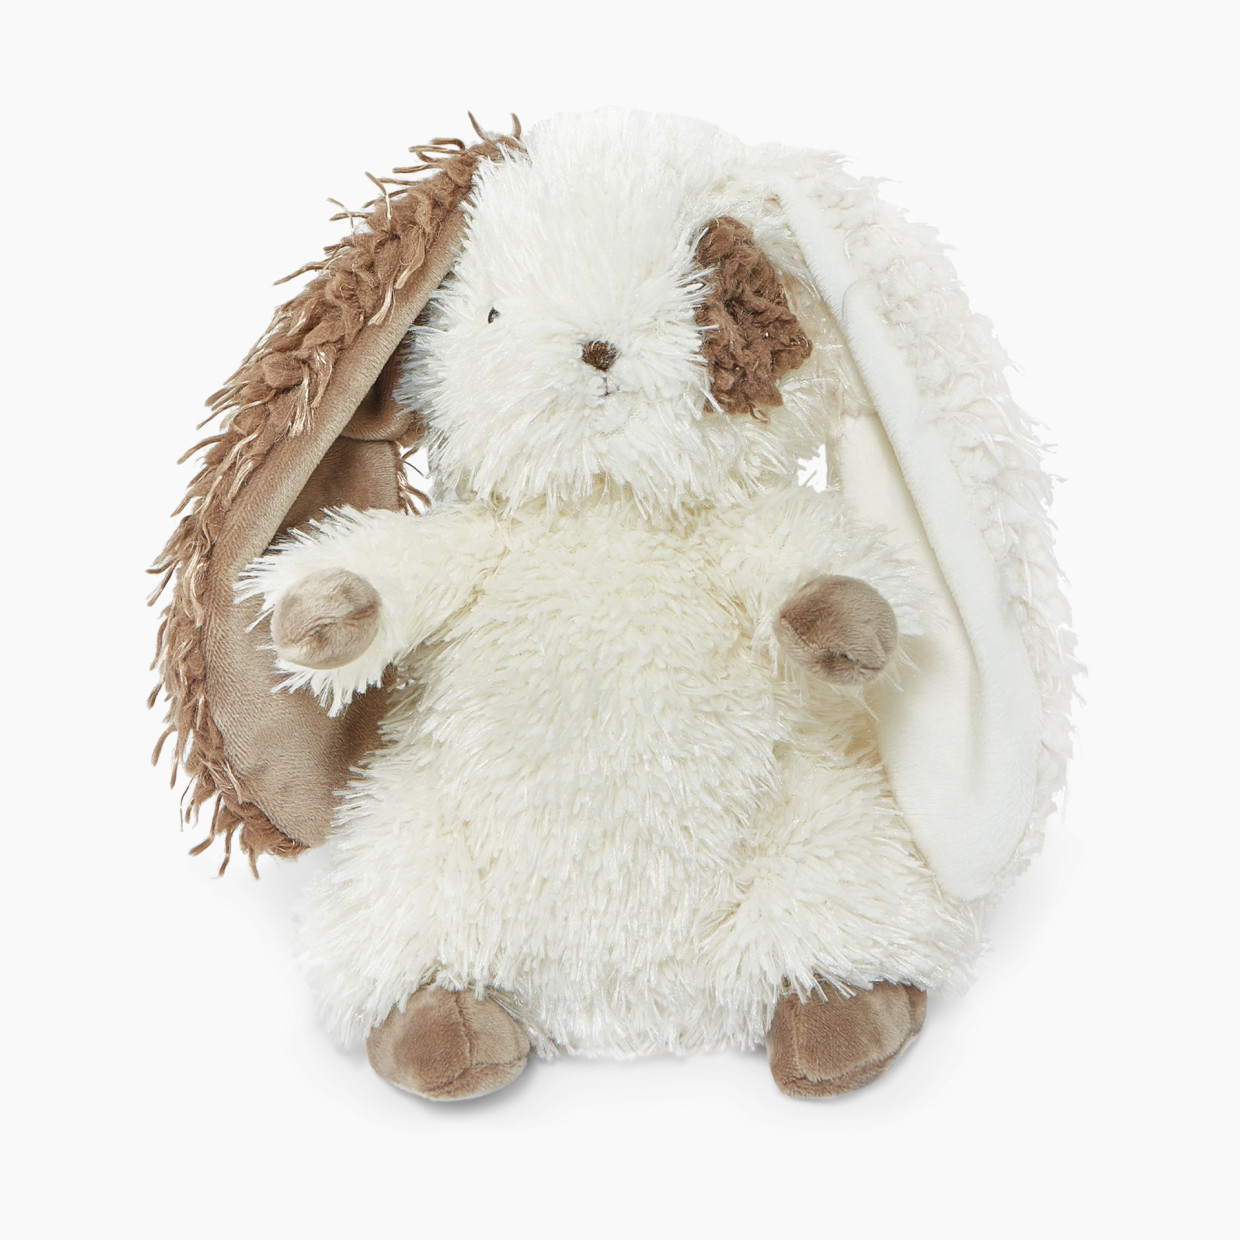 Bunnies By The Bay, Inc. Shaggy Stuffed Animal - Herby Hare.